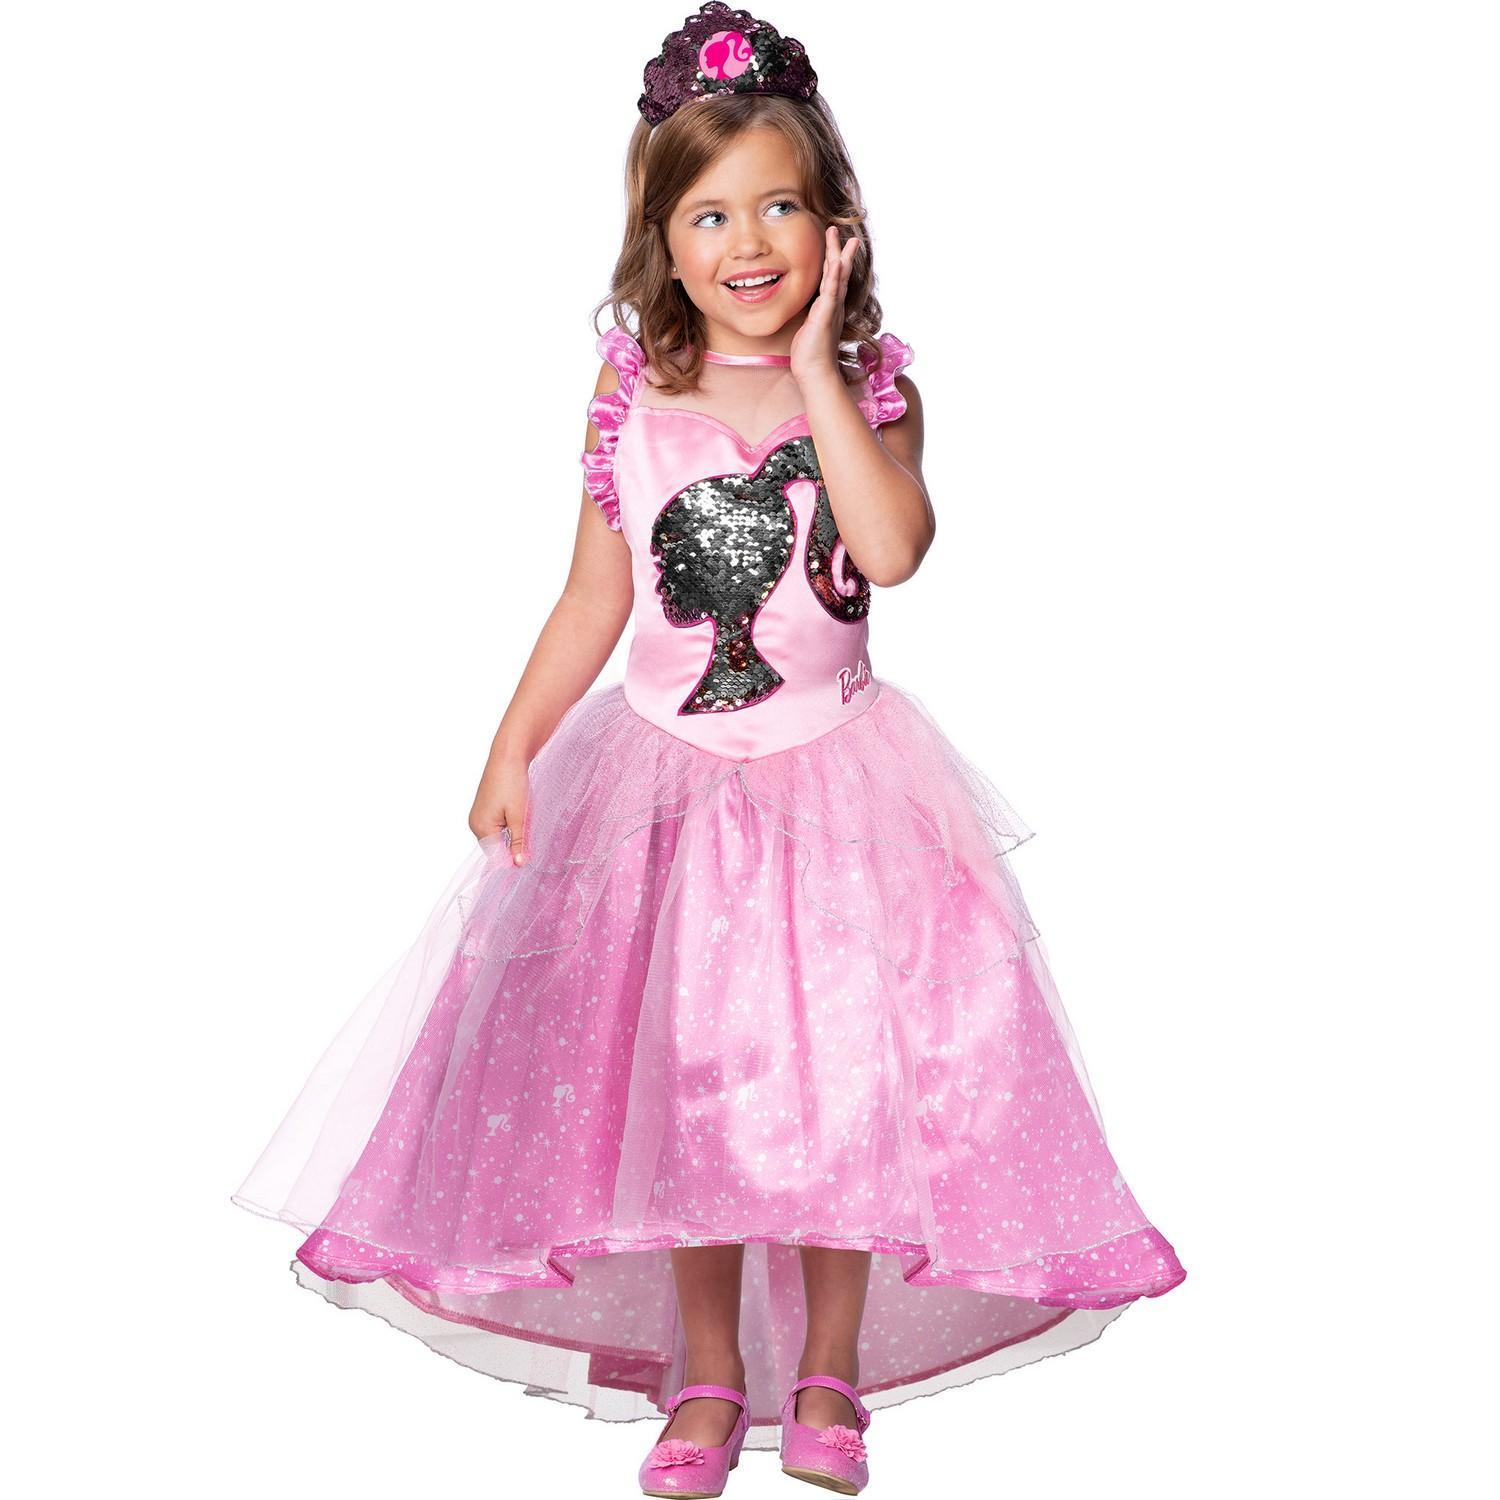 Barbie Girls Princess Costume (Pink) (7-8 Years)